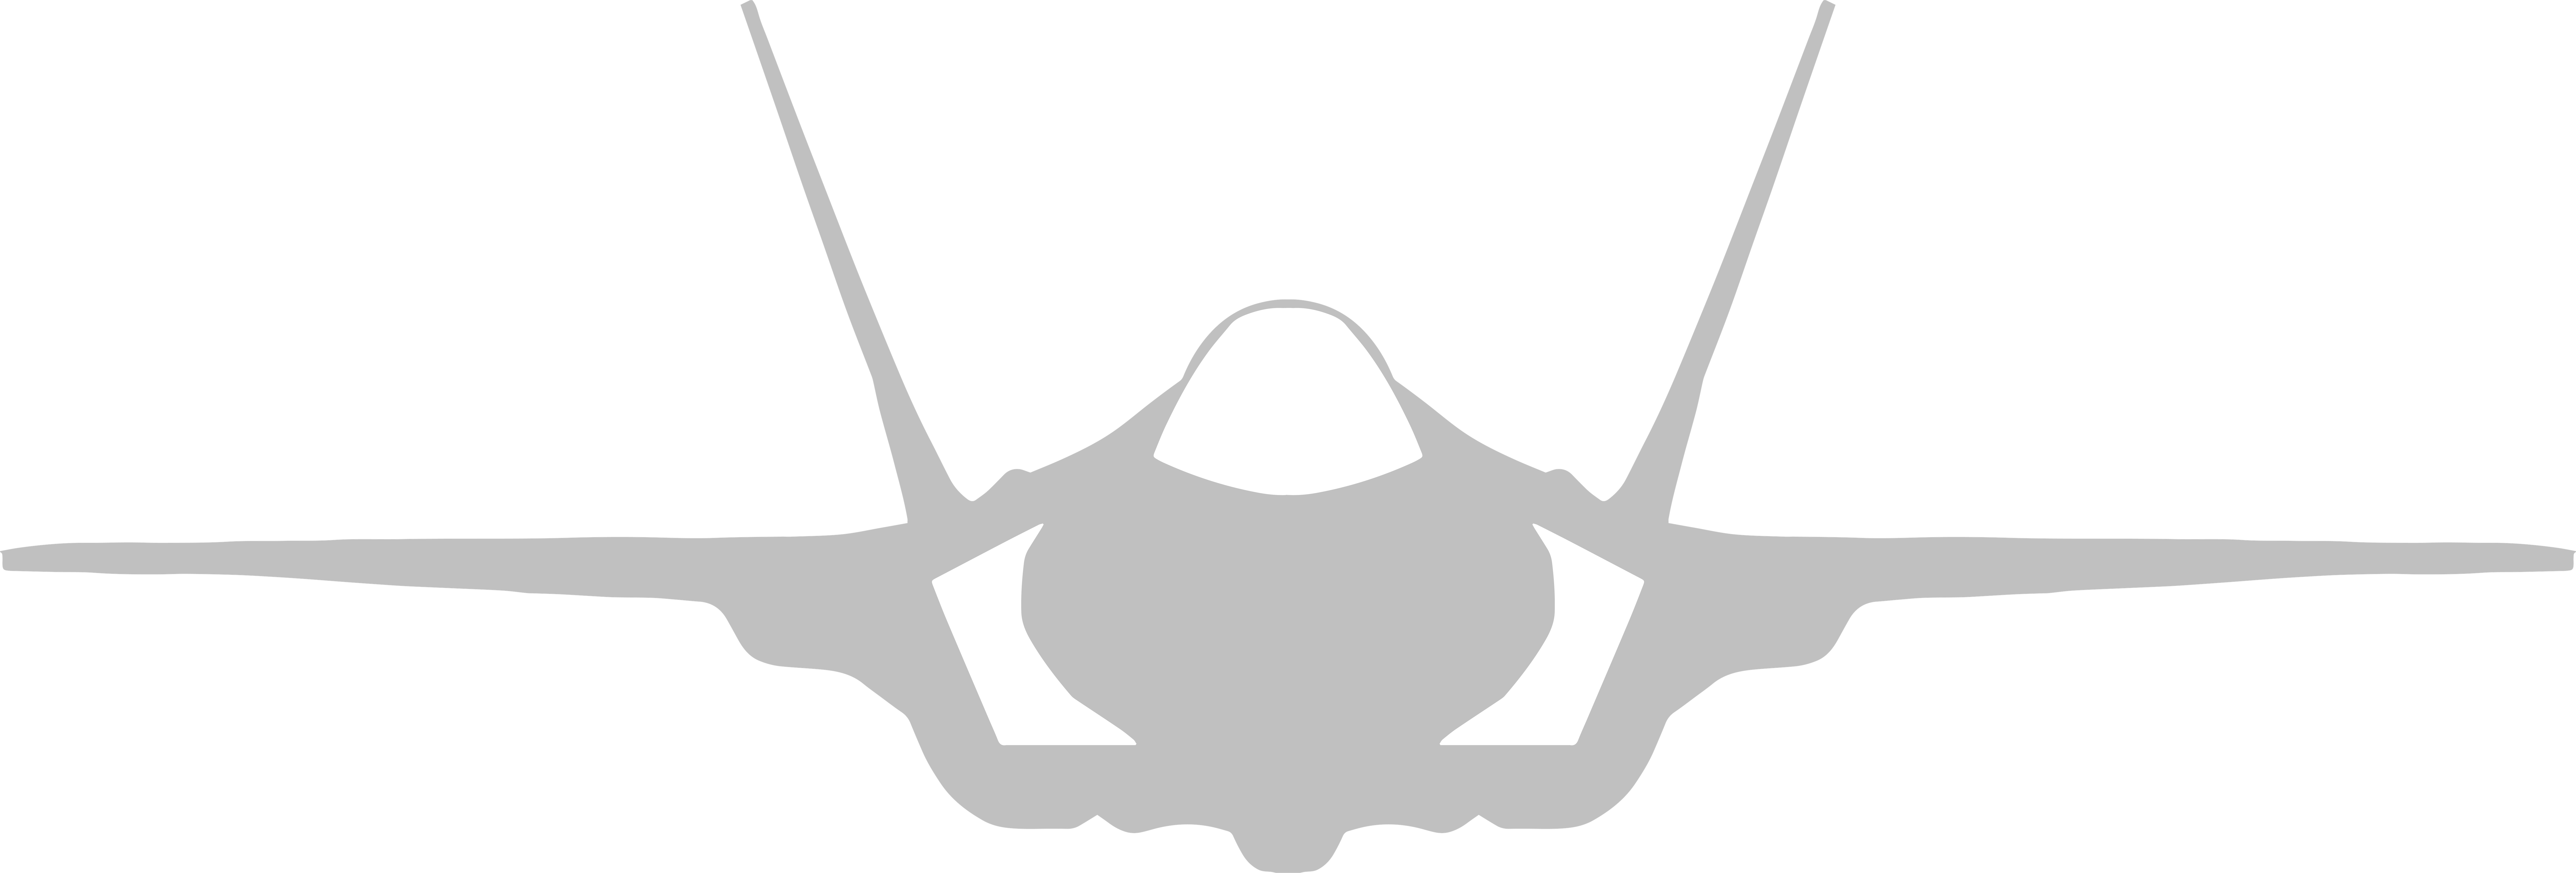 Gray illustration of an F-35